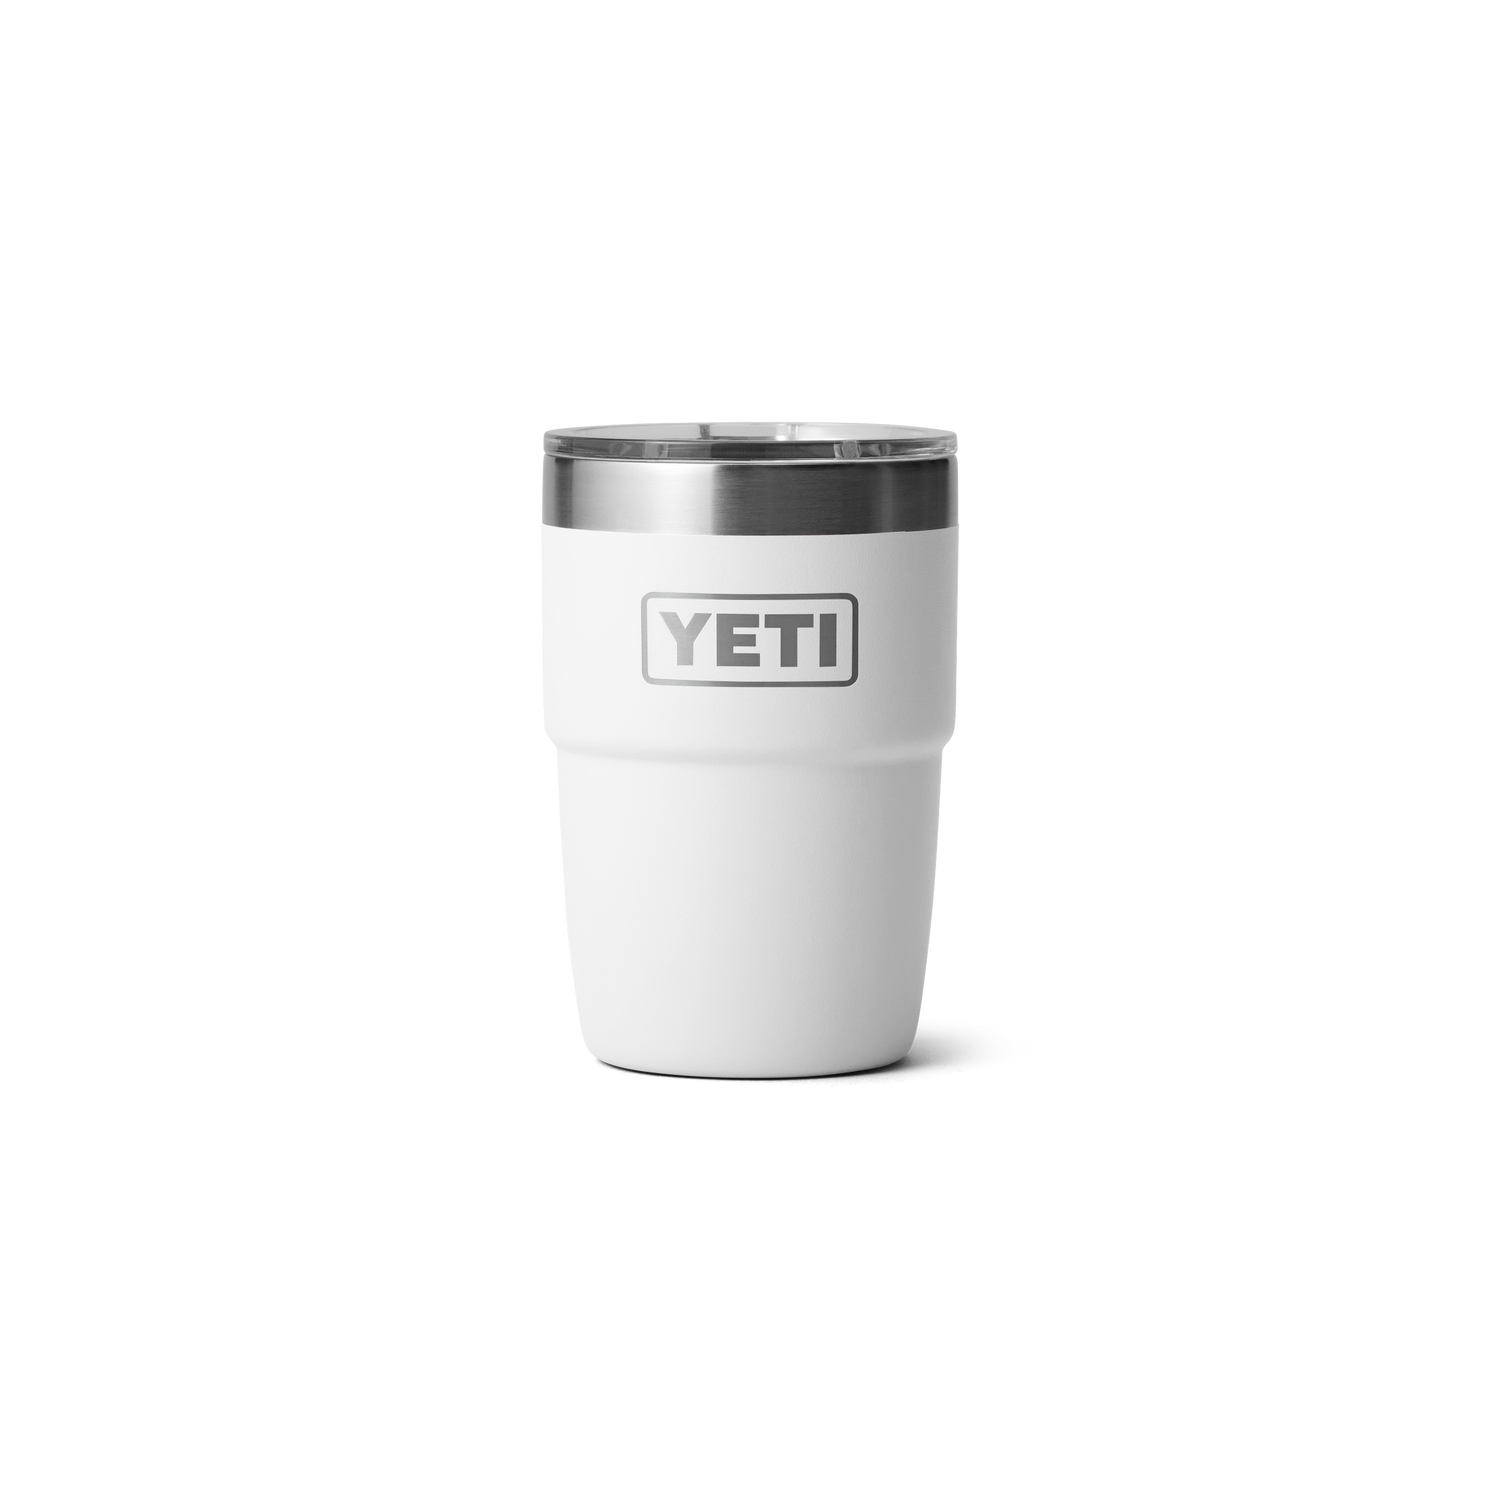 YETI CA Barware: Insulated Lowballs, Mugs, Pints, Tumblers